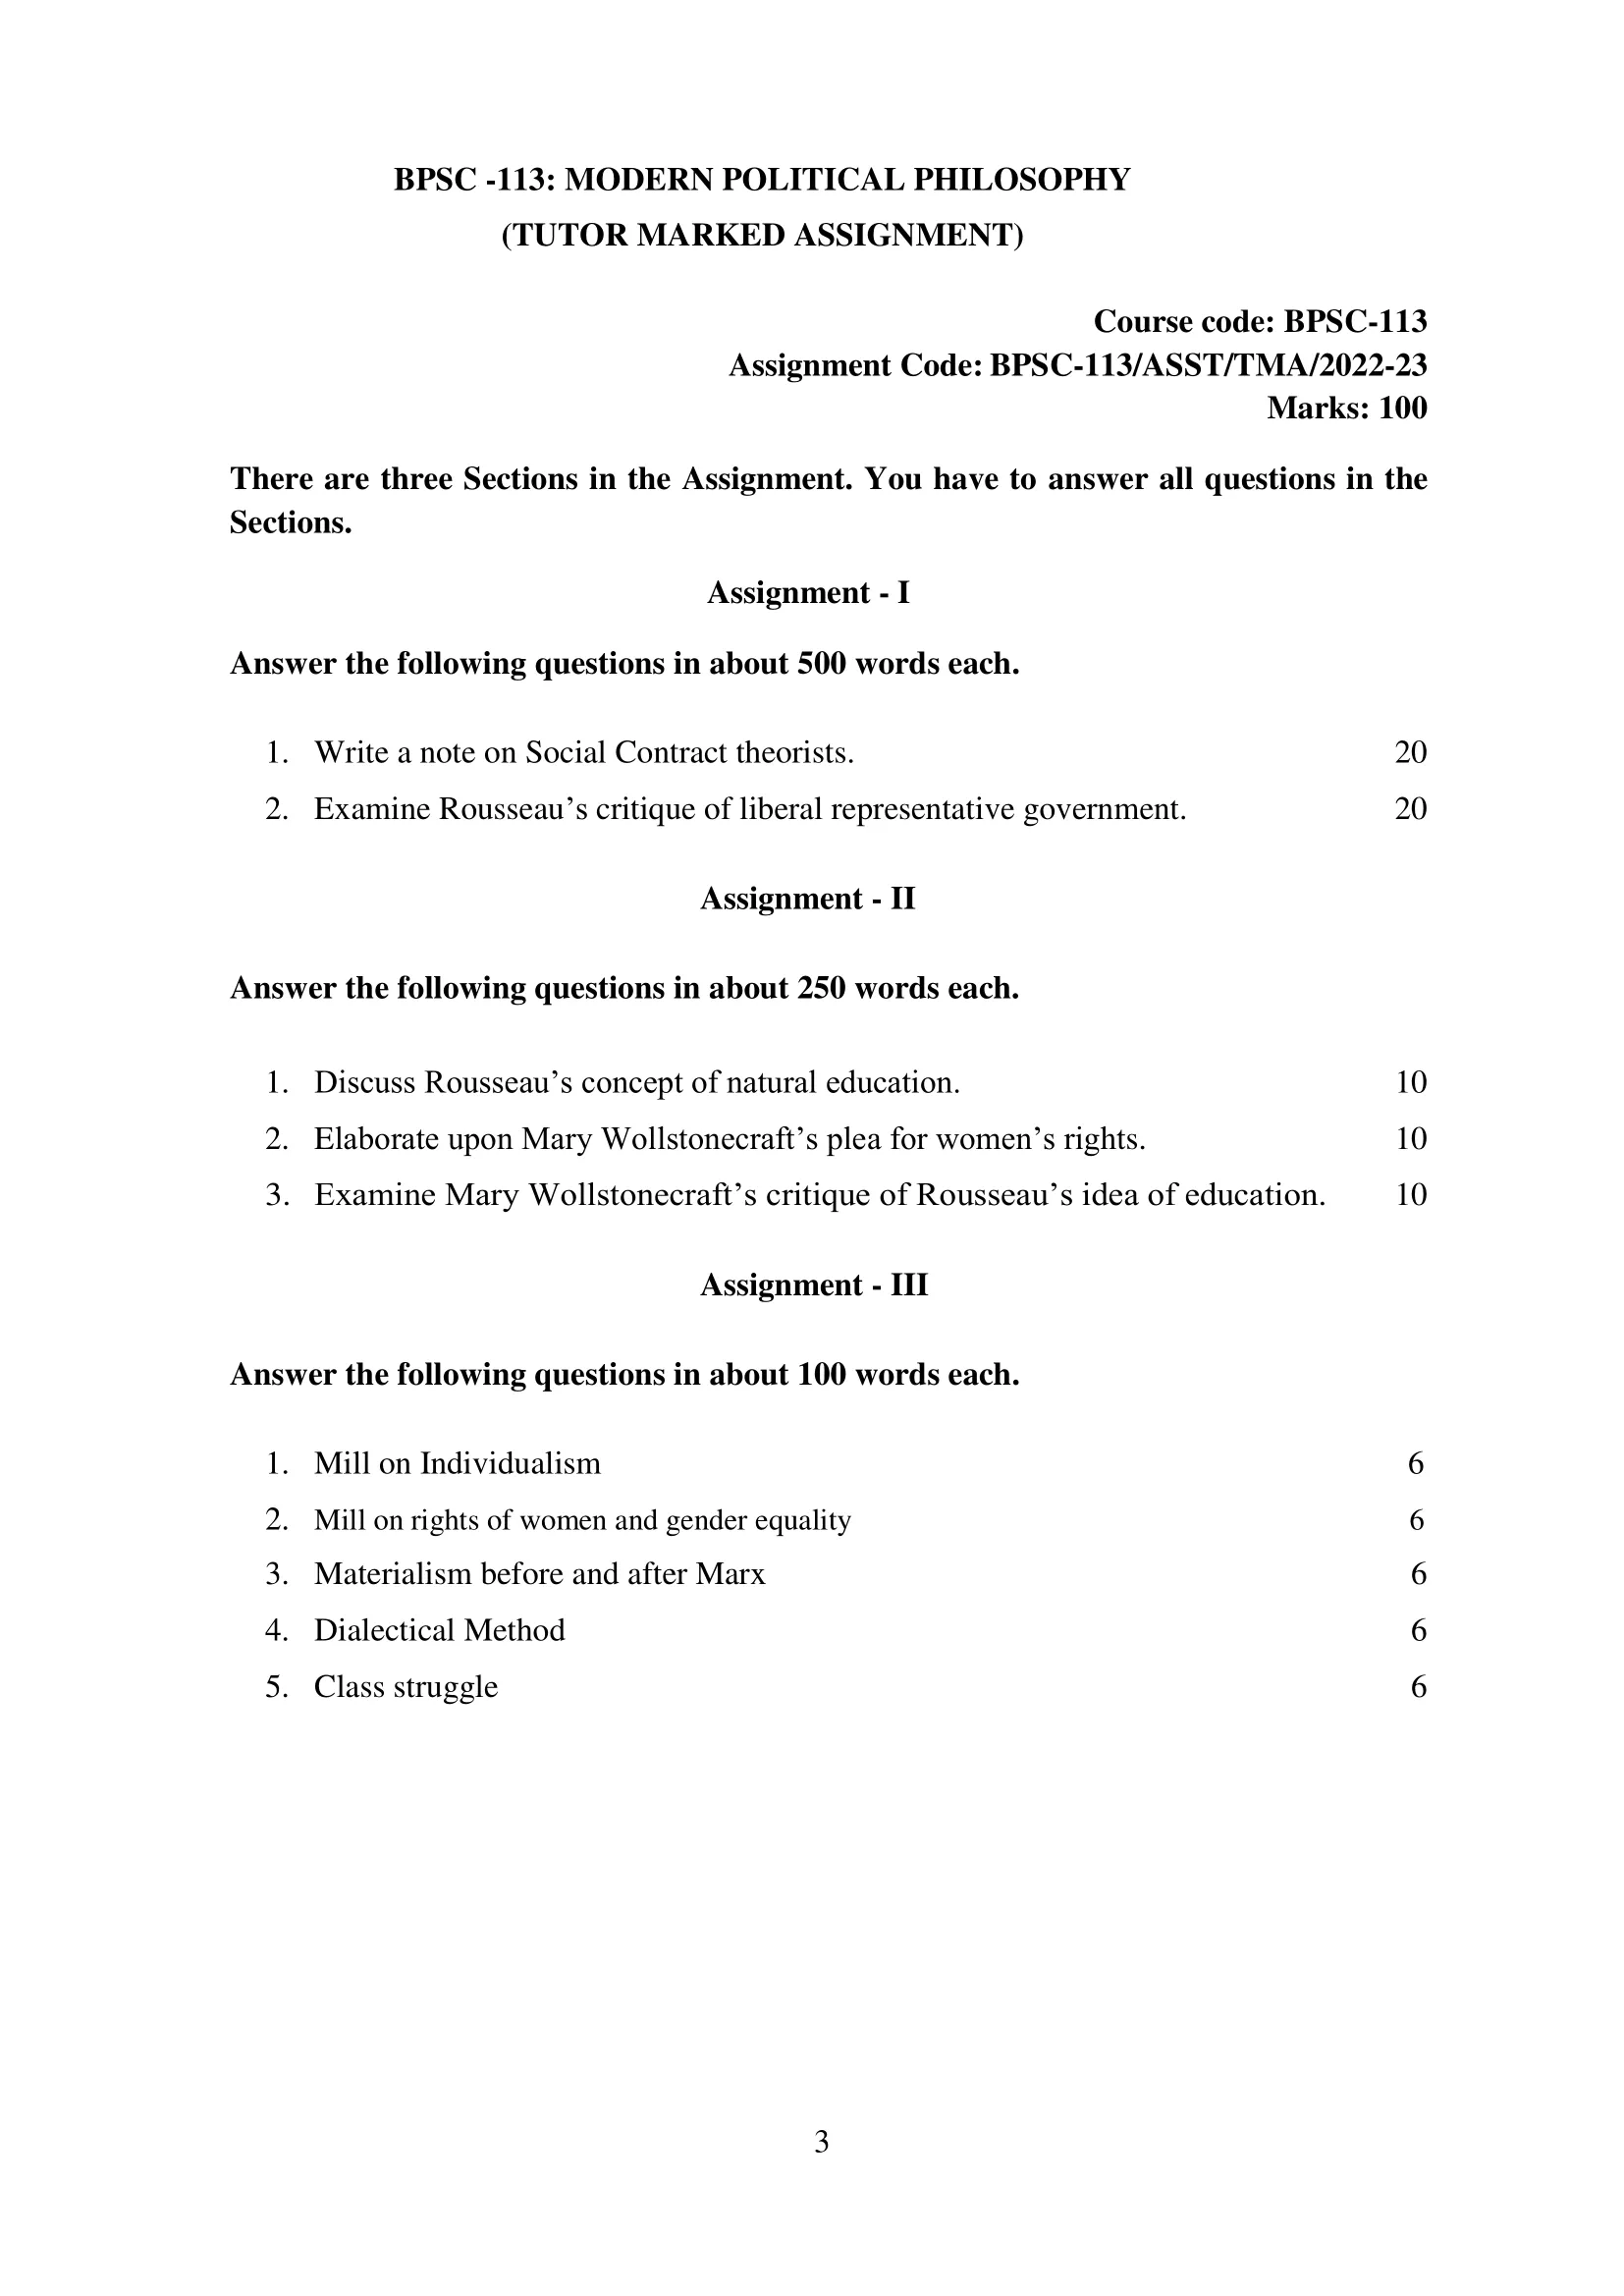 BPSC-113 IGNOU BAG Solved Assignment-MODERN POLITICAL PHILOSOPHY